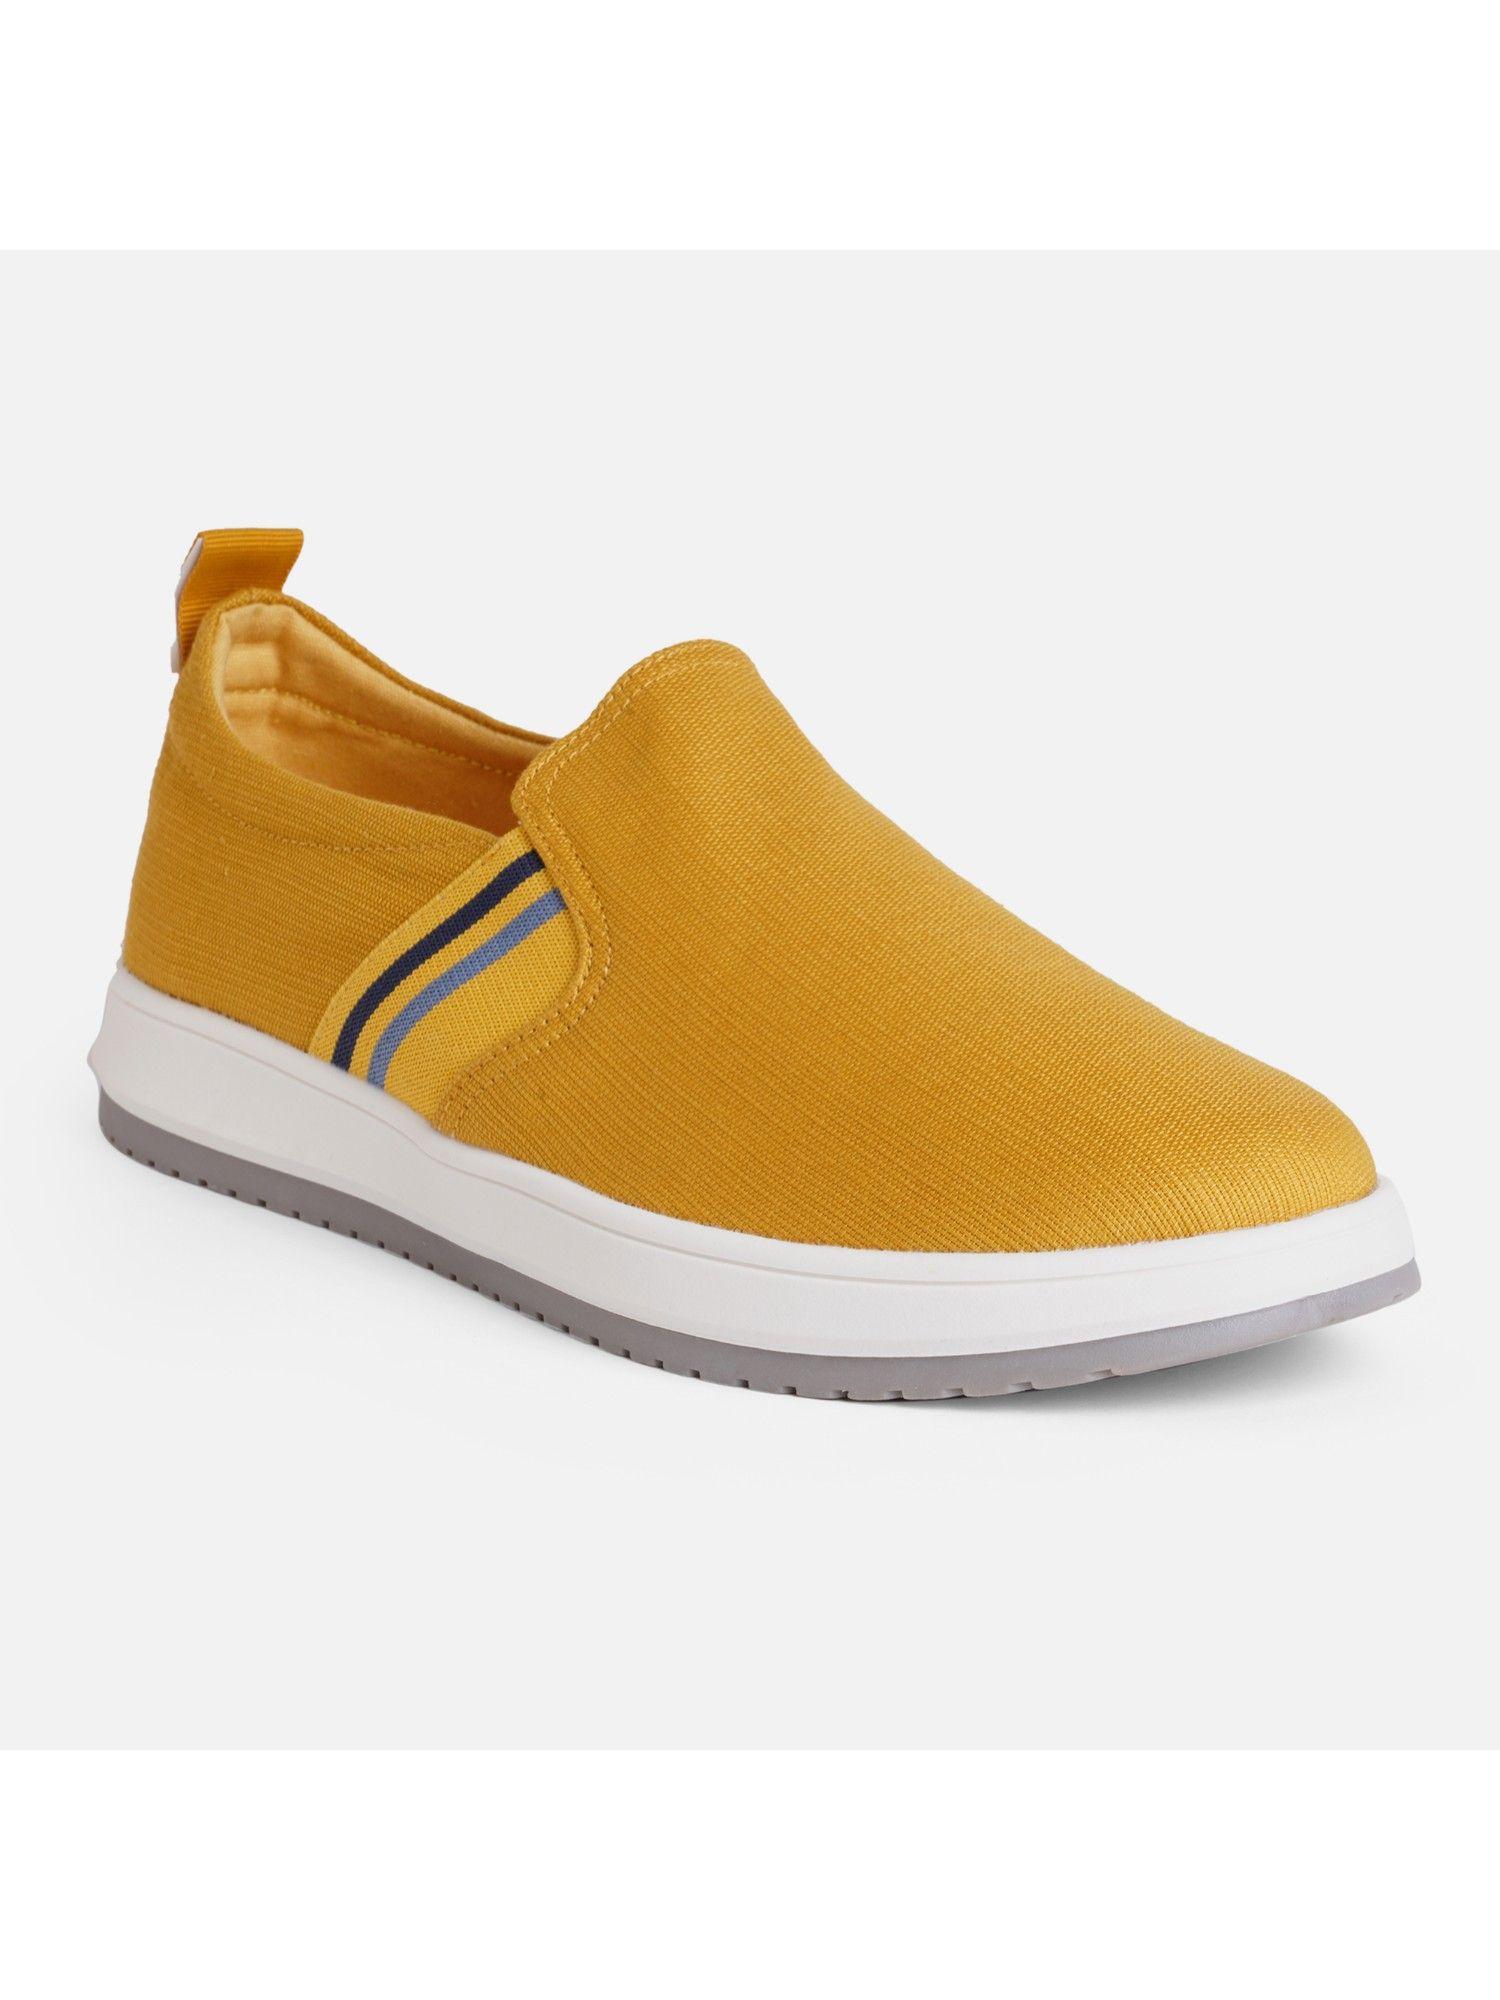 opencourt-textile-yellow-woven-shoe-slip-on